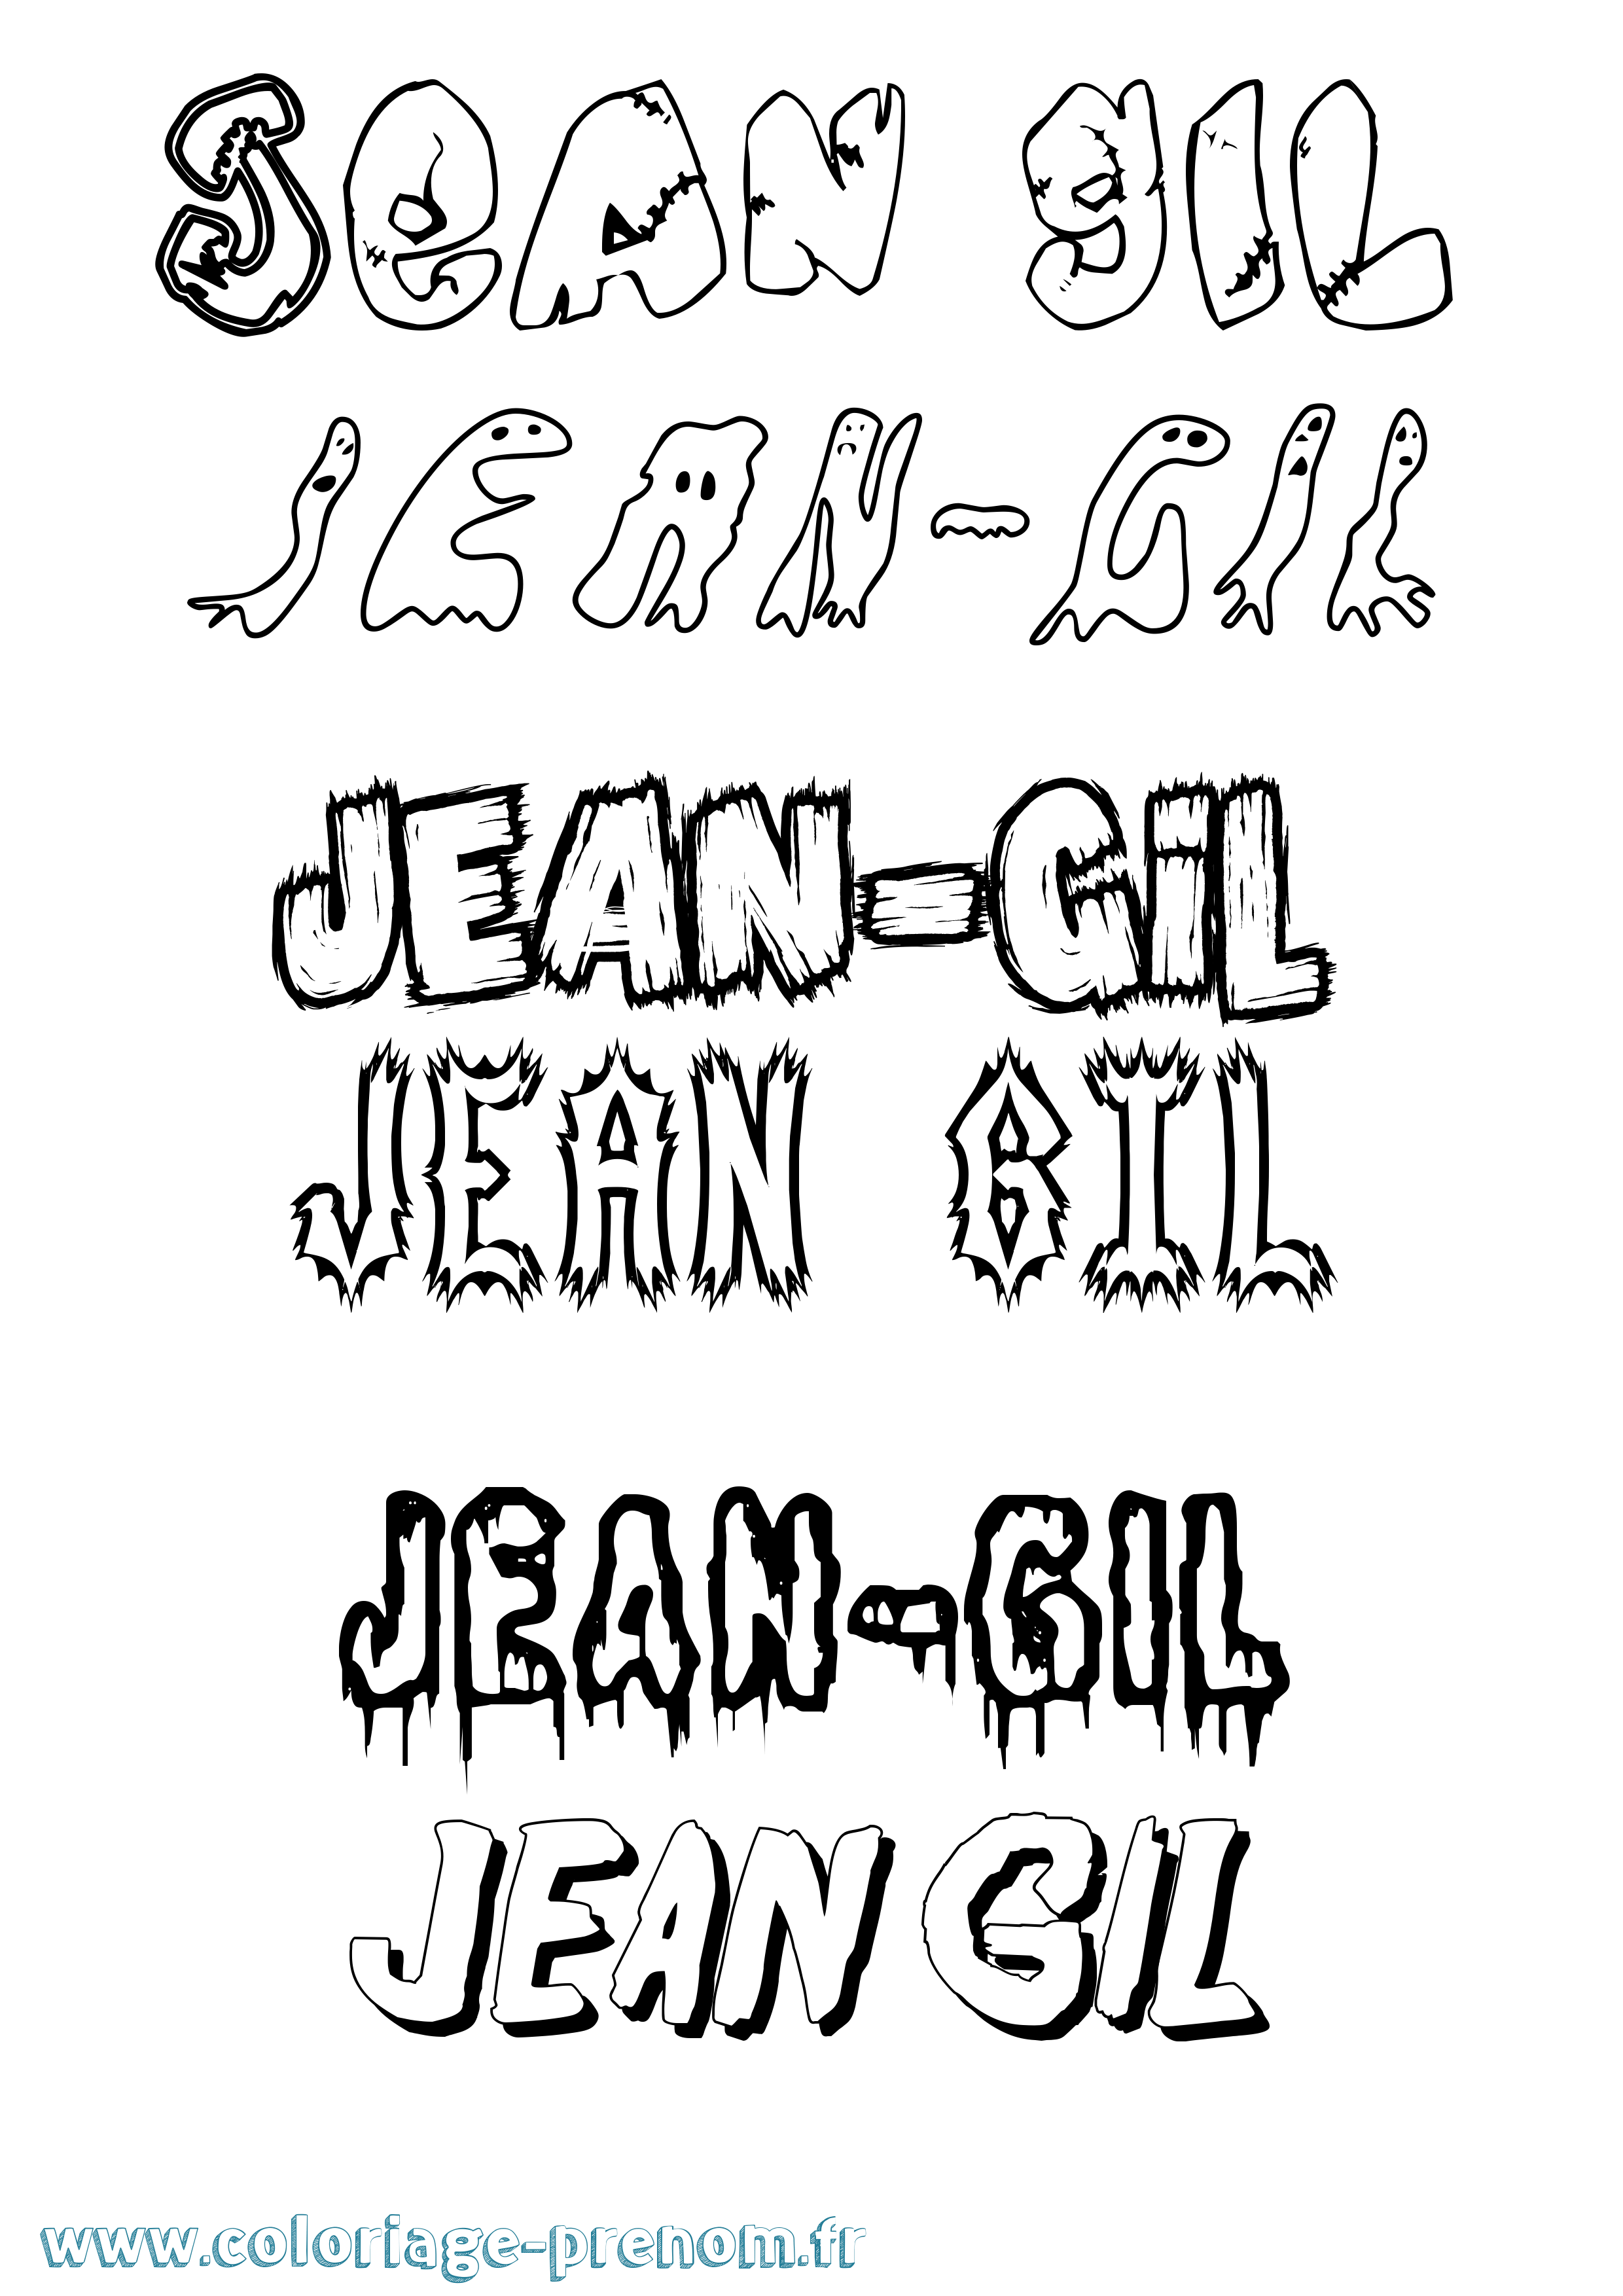 Coloriage prénom Jean-Gil Frisson